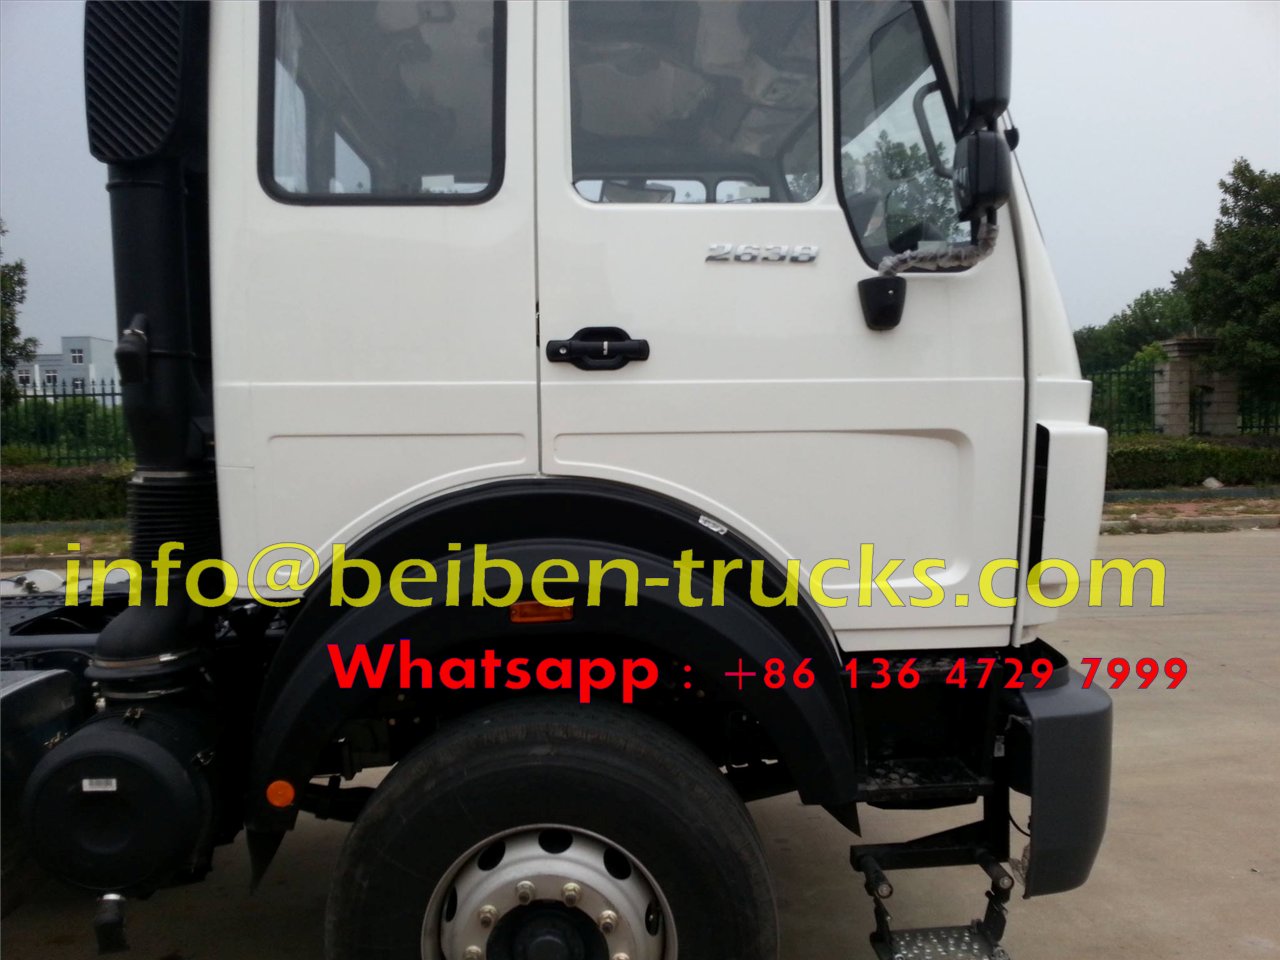 tanzania beiben 2636 tractor trucks